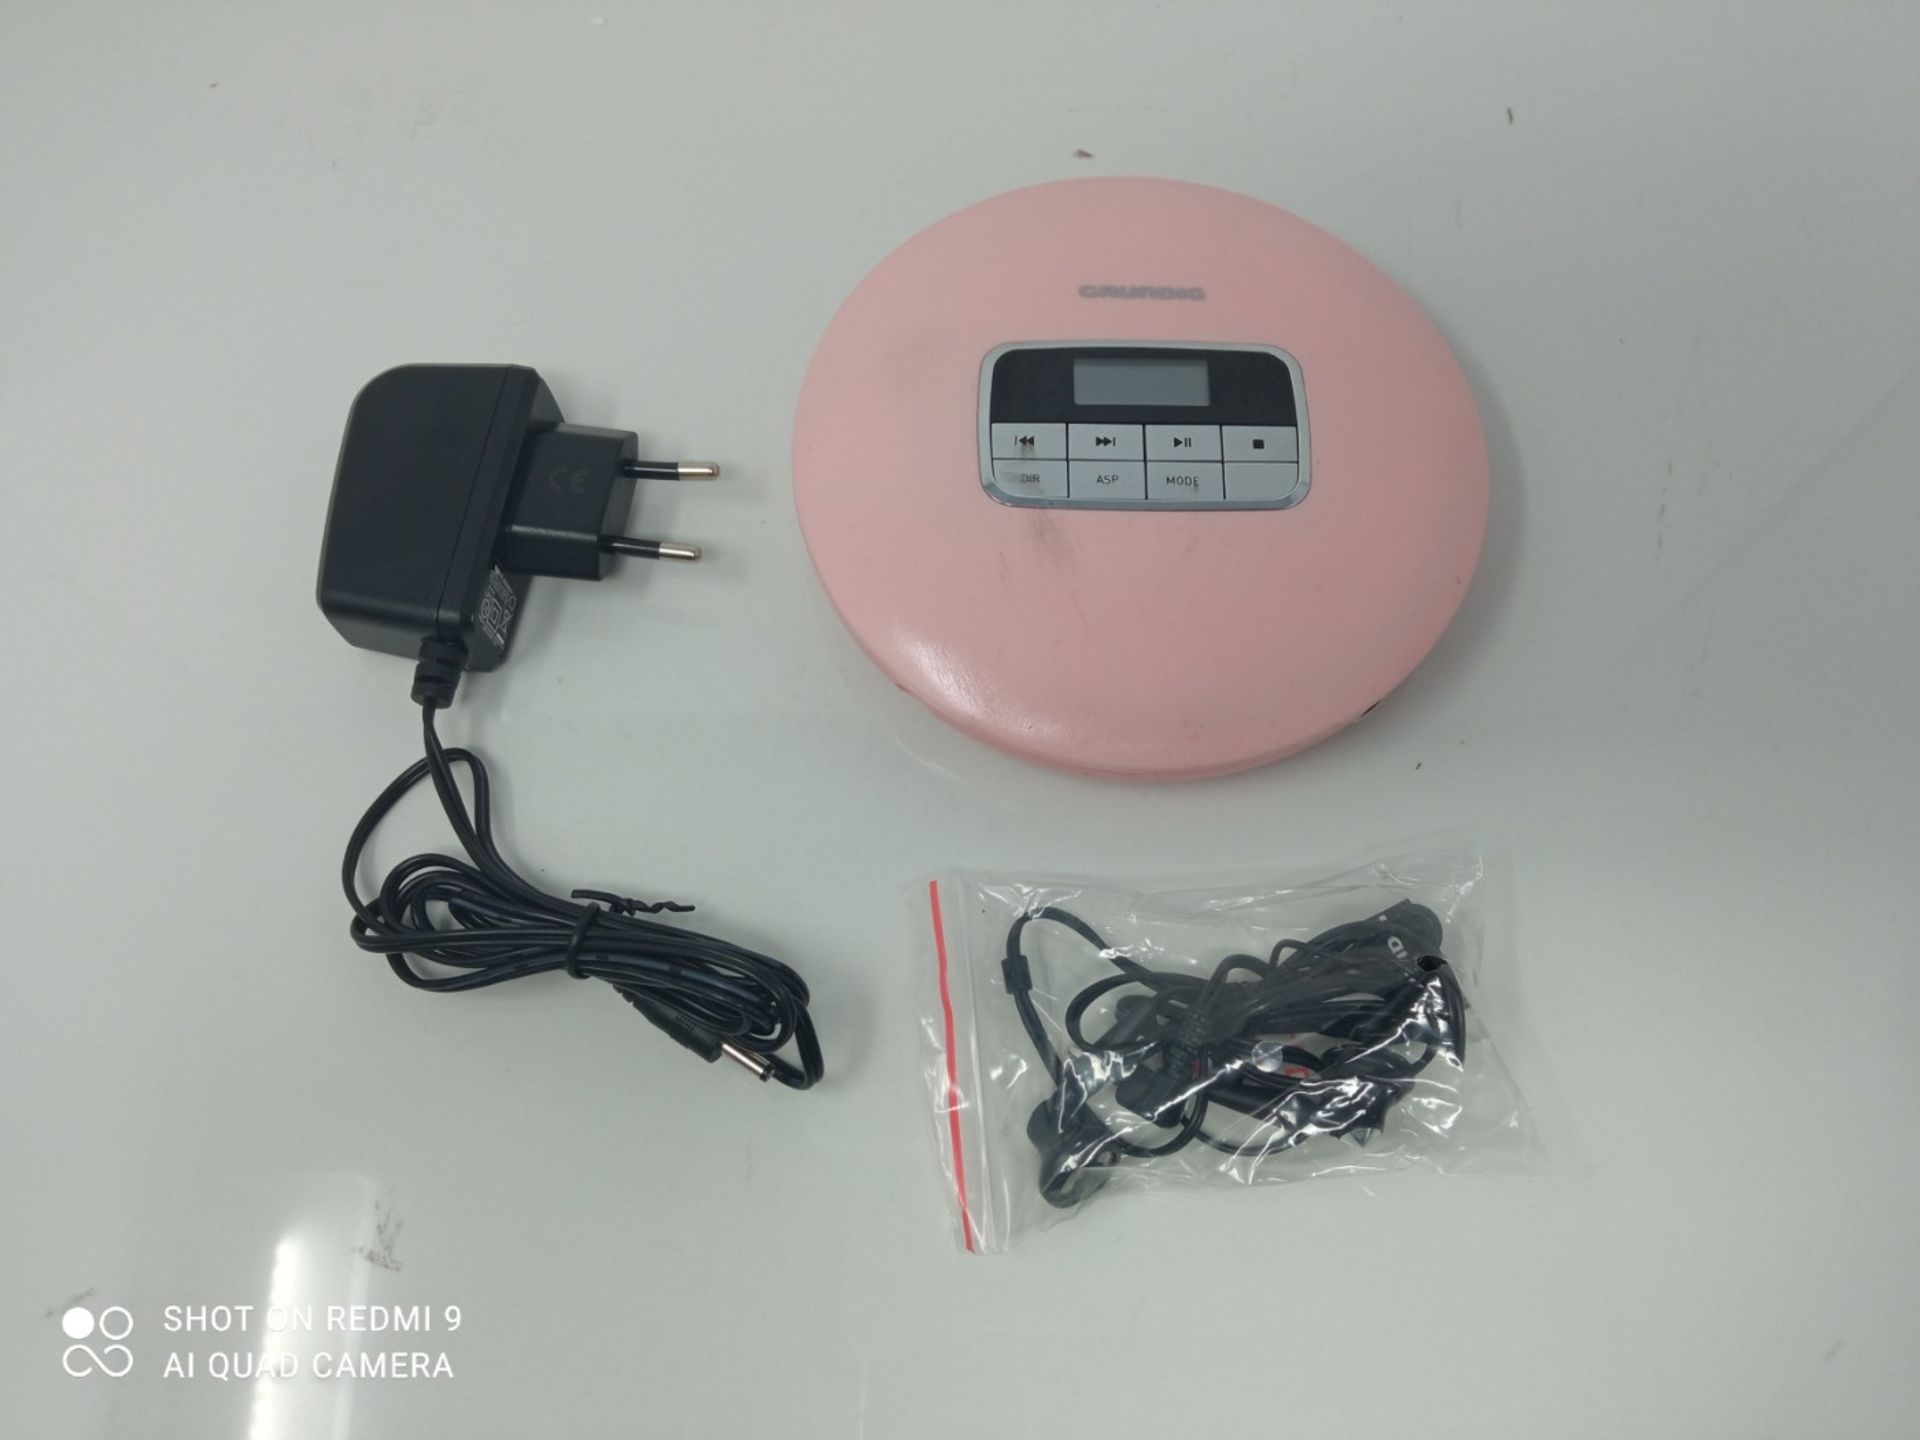 Grundig GCDP 8000 GDR1402 Portable CD Player Pink - Image 3 of 3